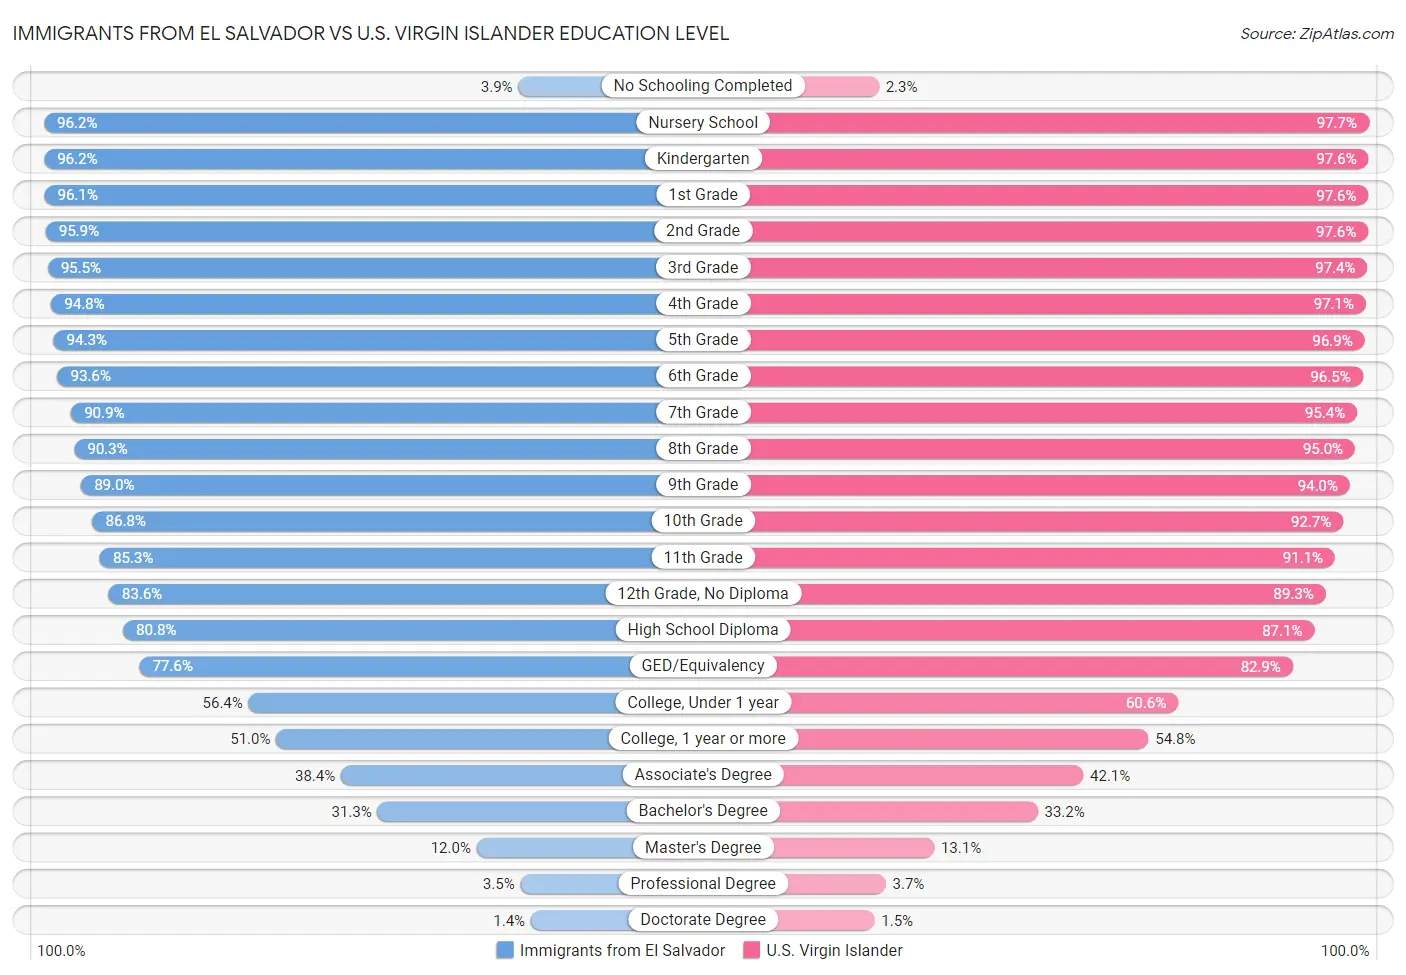 Immigrants from El Salvador vs U.S. Virgin Islander Education Level